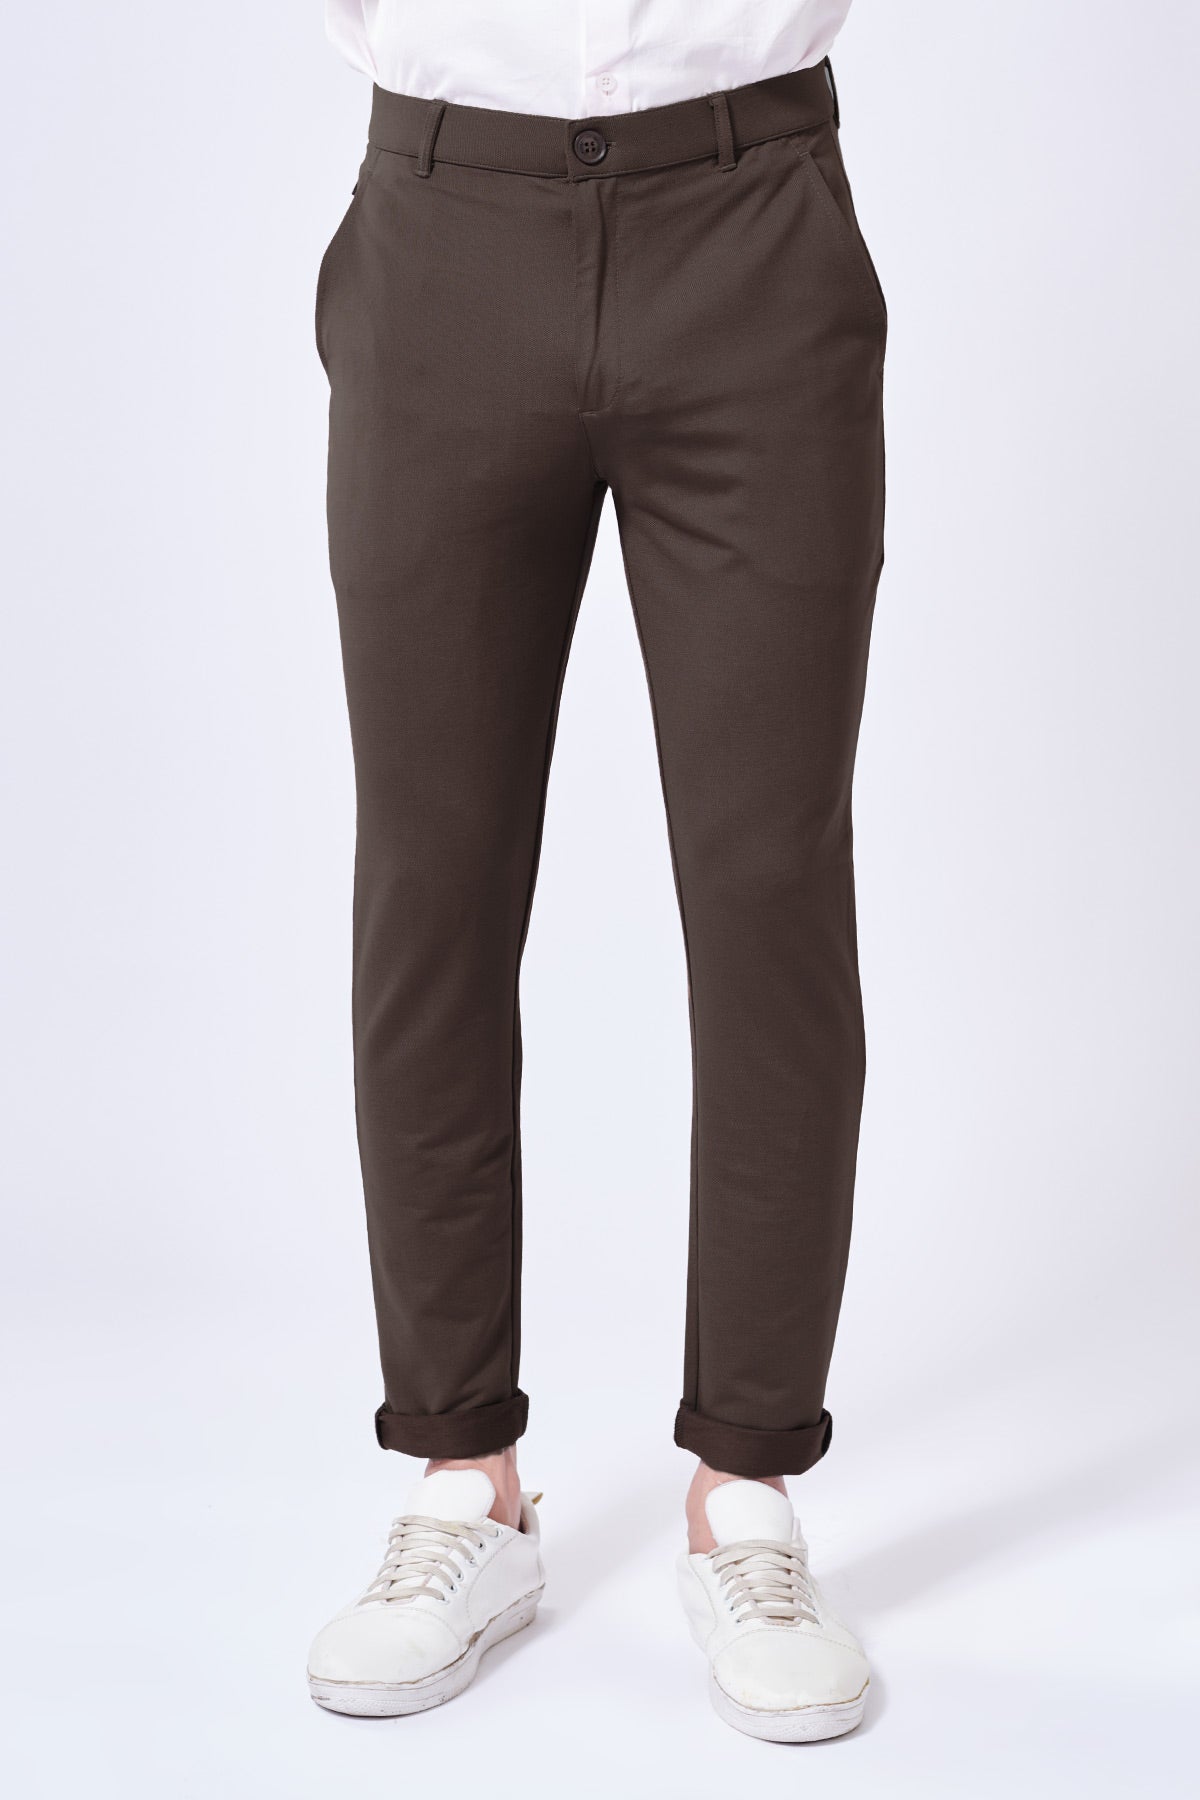 brown pants for men male casual business solid slim pants zipper